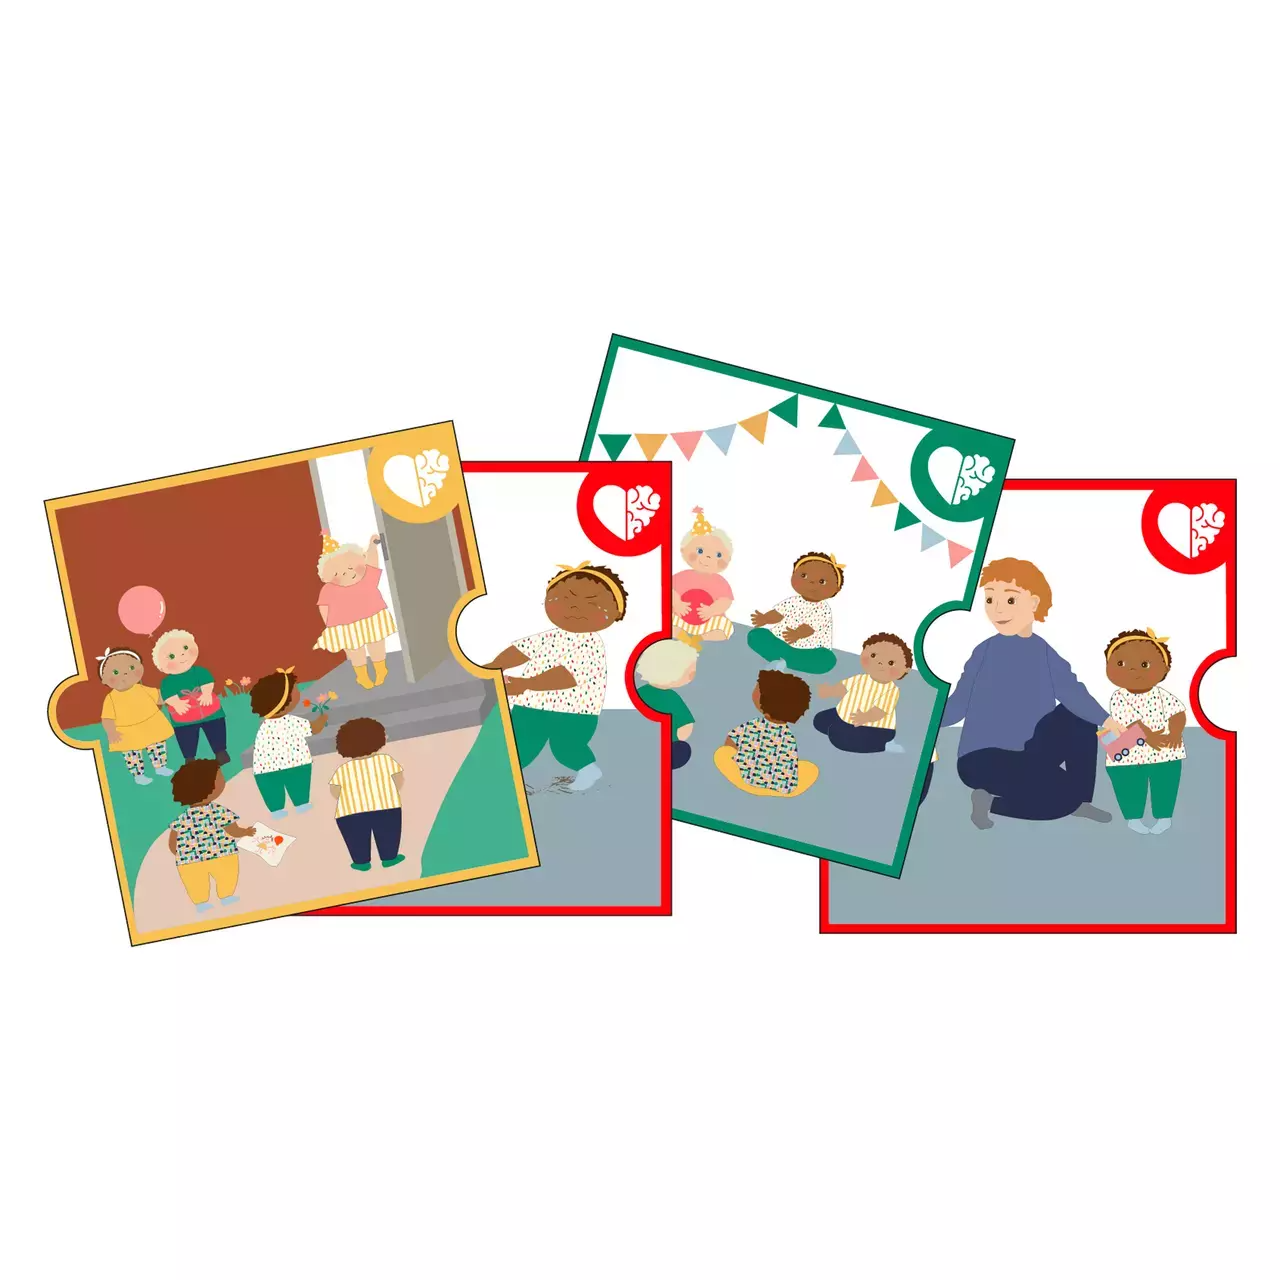 Education rubens barn doll accessories emotional scenario cards baby